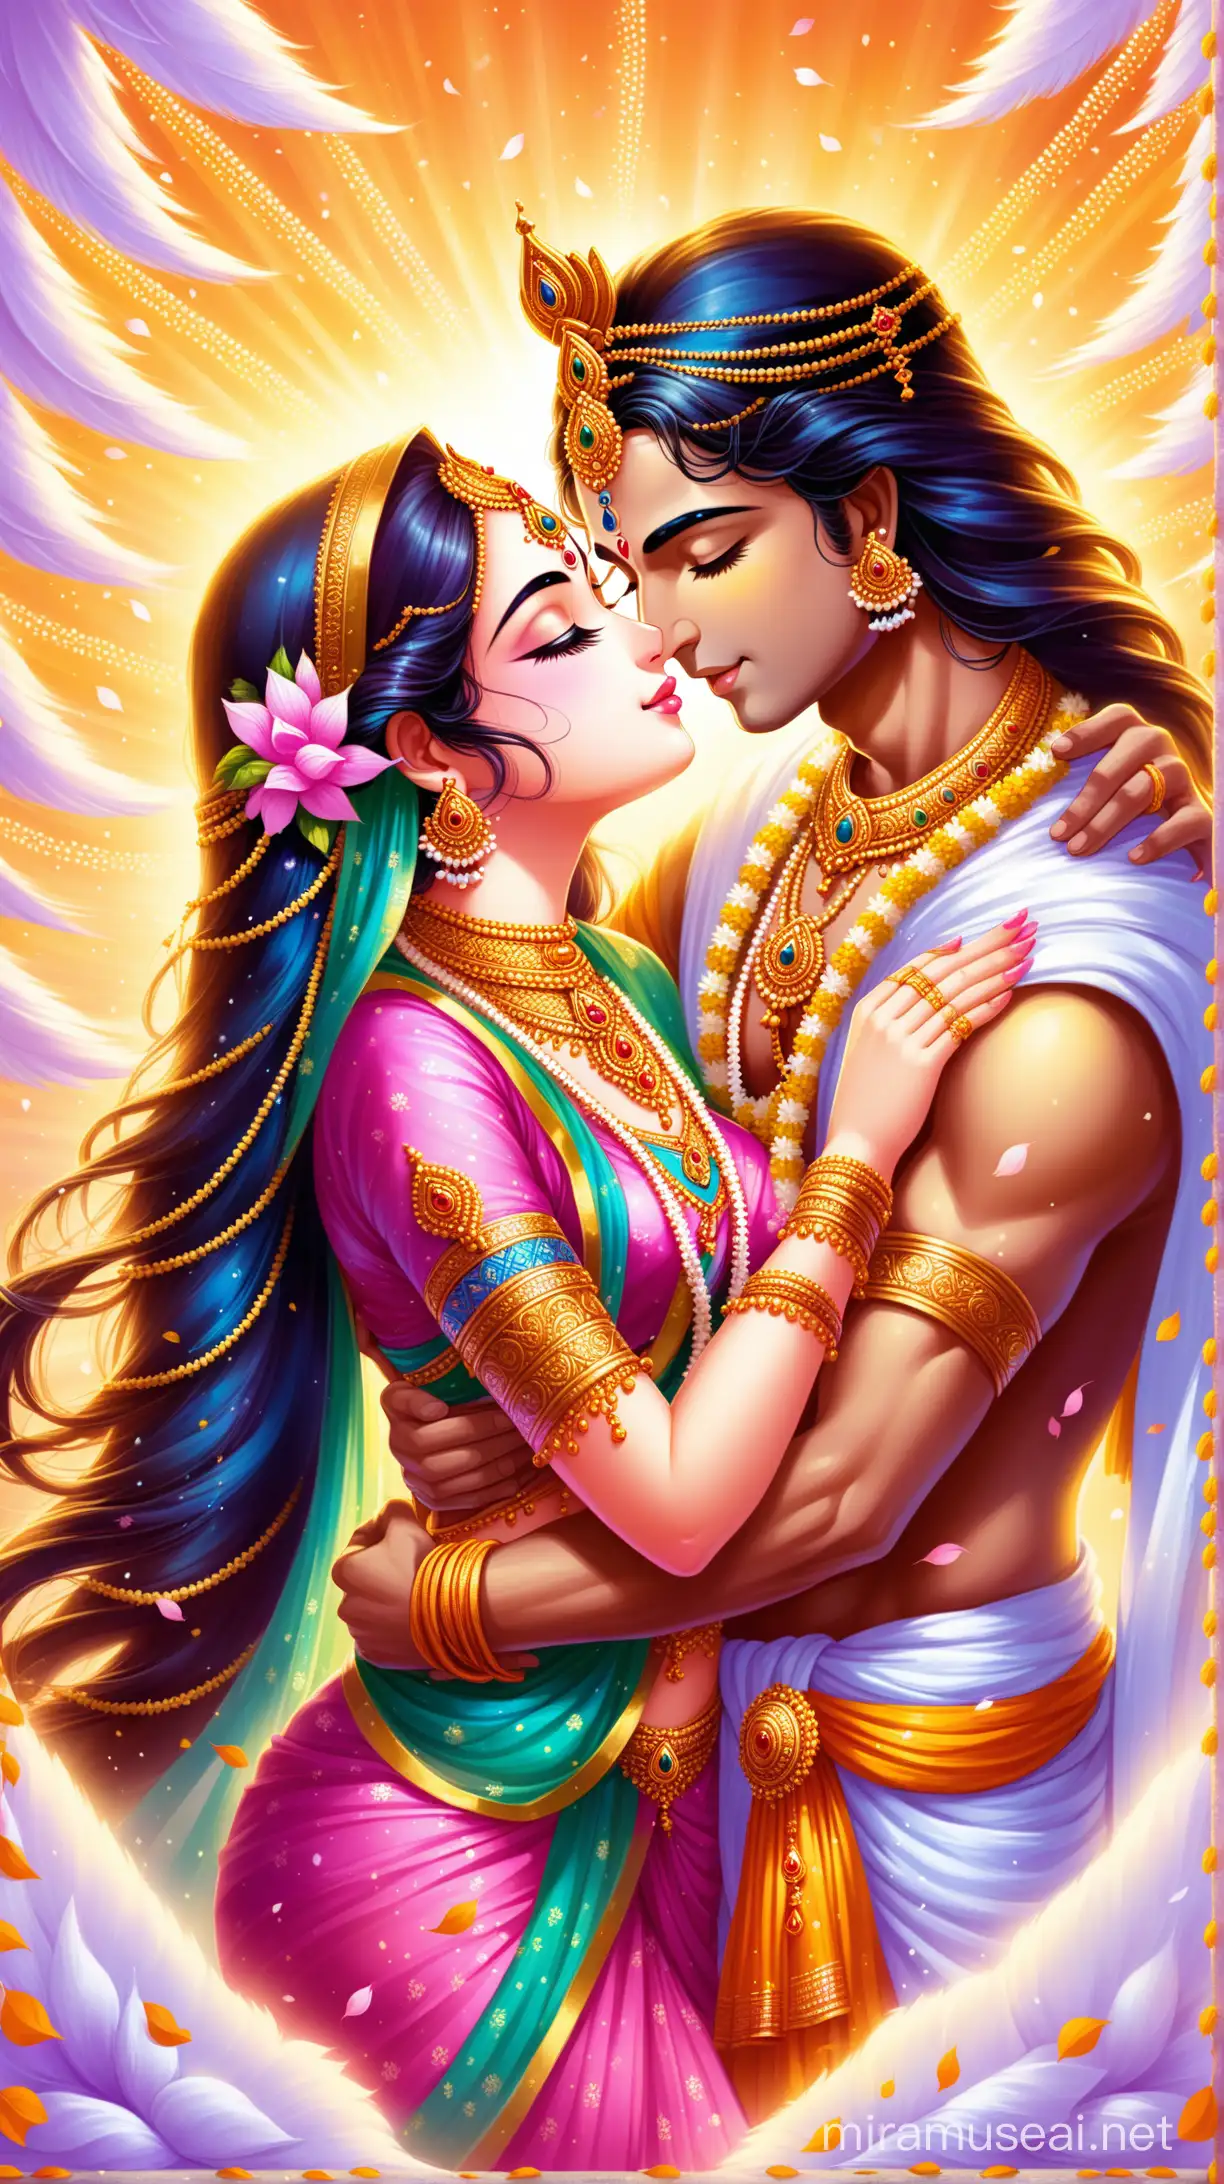 Radha Krishna kiss of love, divine and pure, blissful
